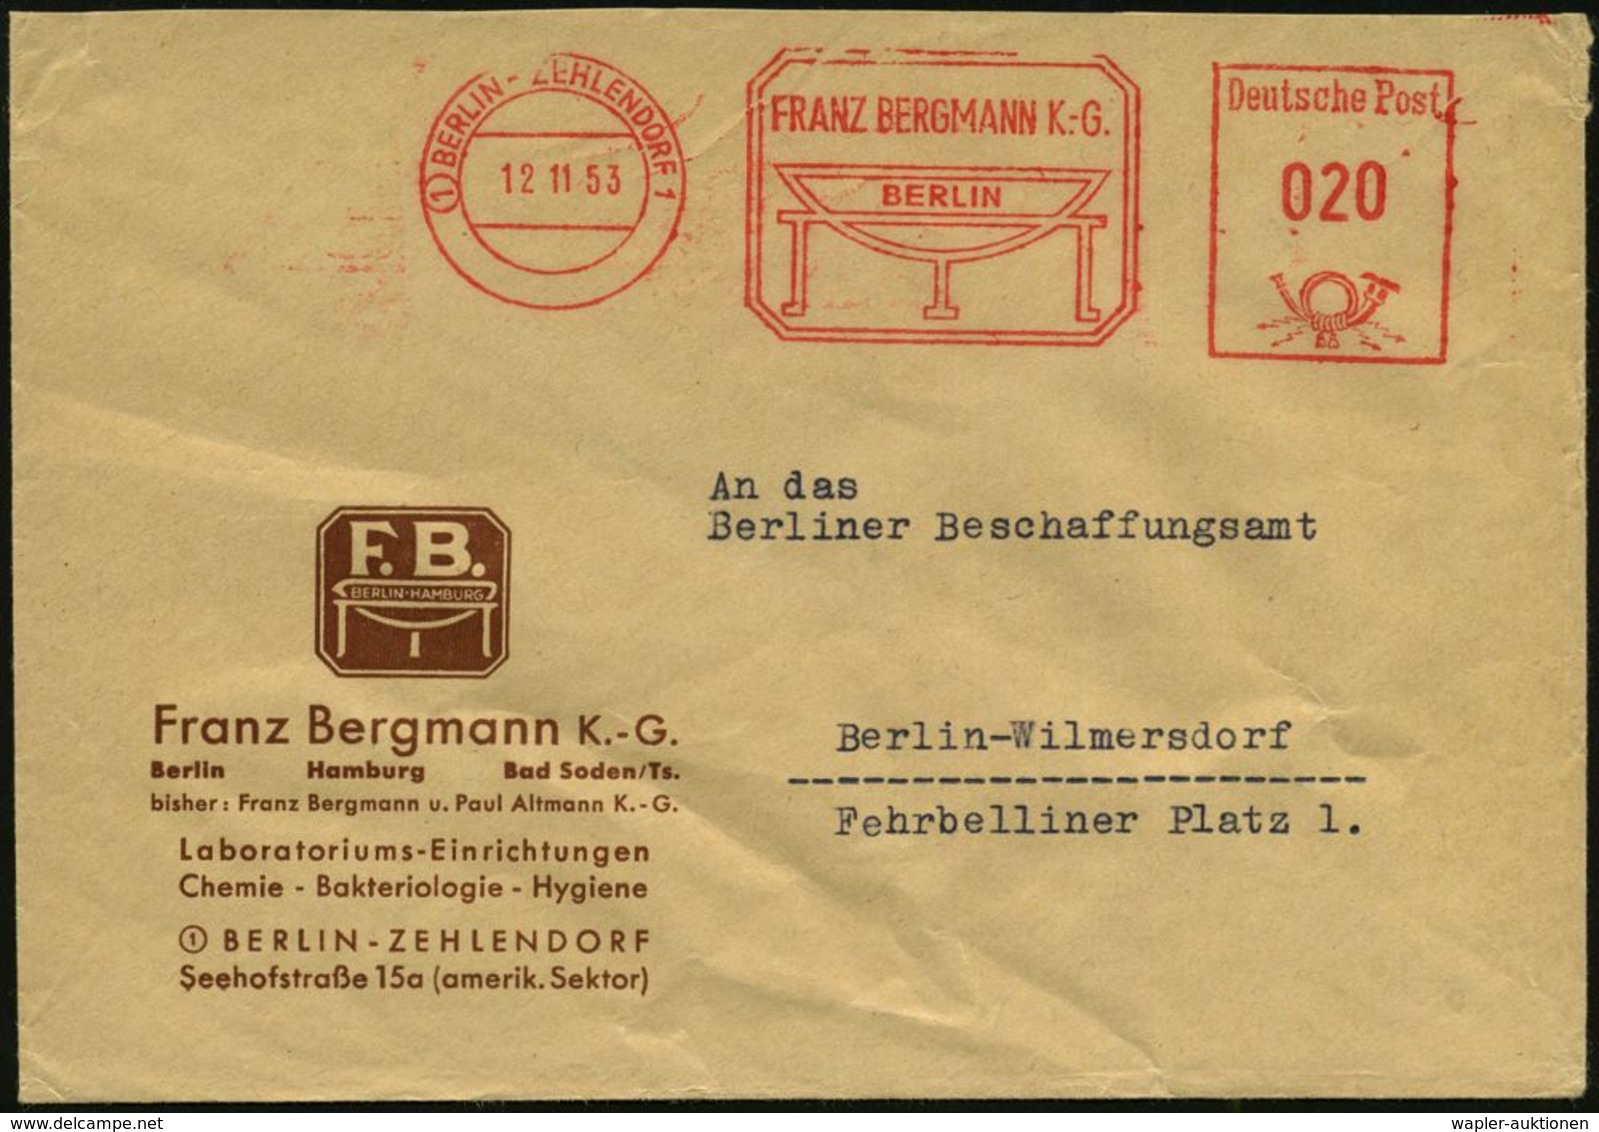 MEDIZINISCHE AUSRÜSTUNG & INSTRUMENTE : (1) BERLIN-ZEHLENDORF 1/ FRANZ BERGMANN KG. 1953 (12.11.) AFS (Schalen-Logo) Mot - Medicina